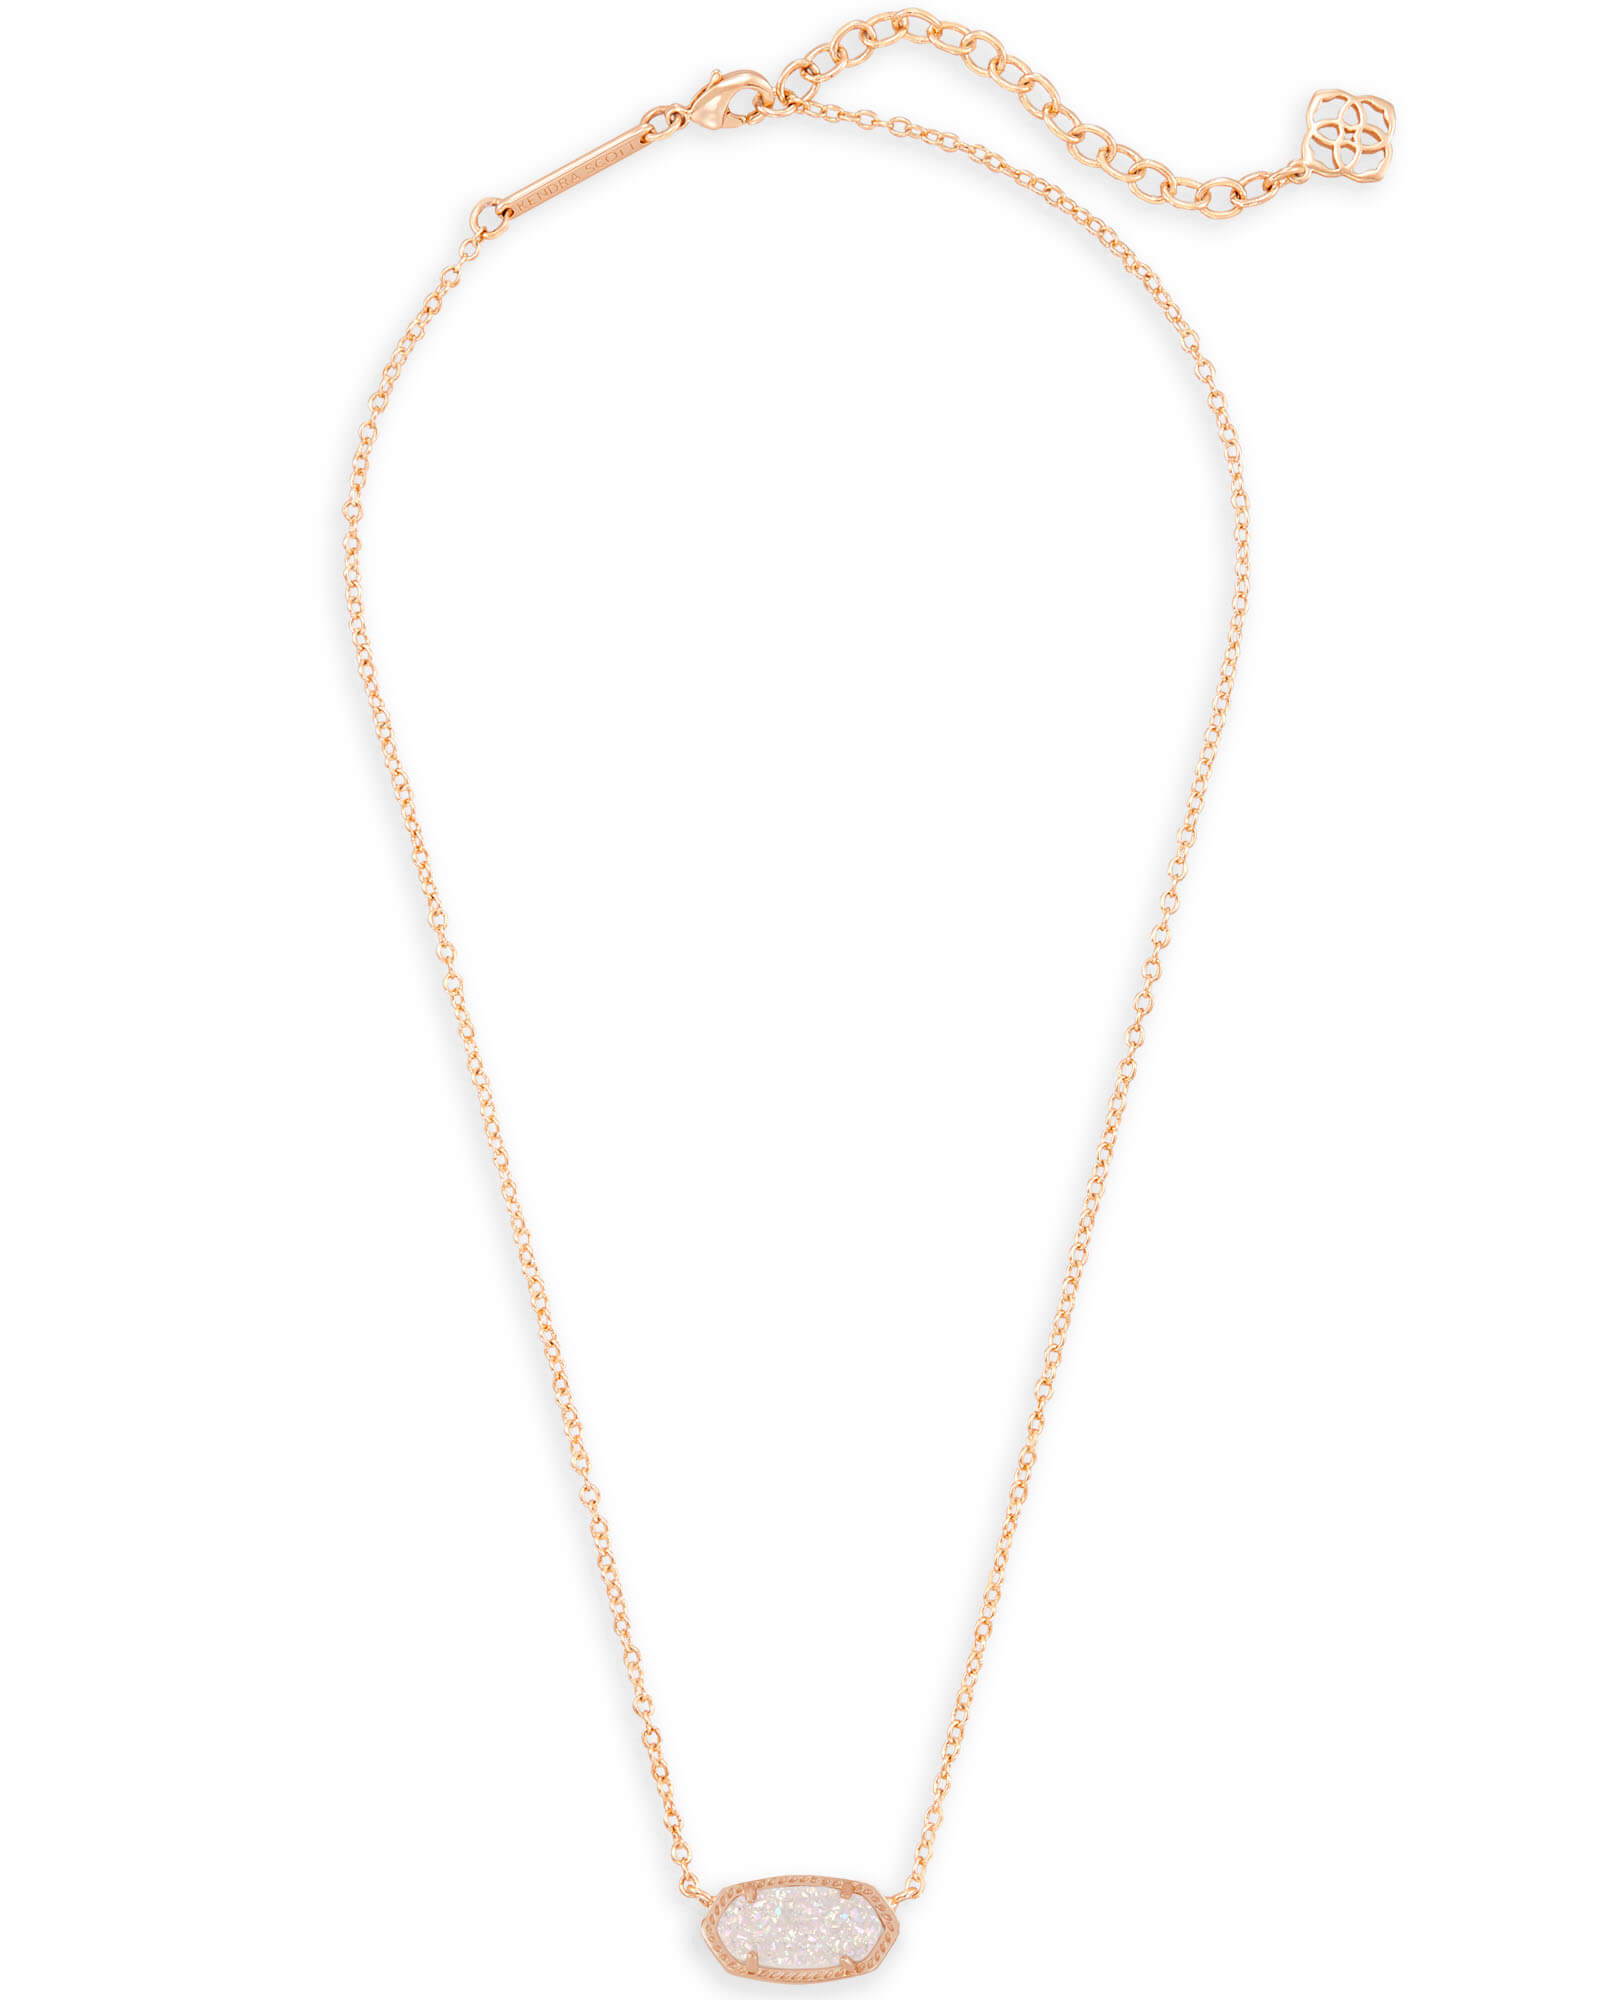 Elisa Rose Gold Pendant Necklace in Drusy | Kendra Scott